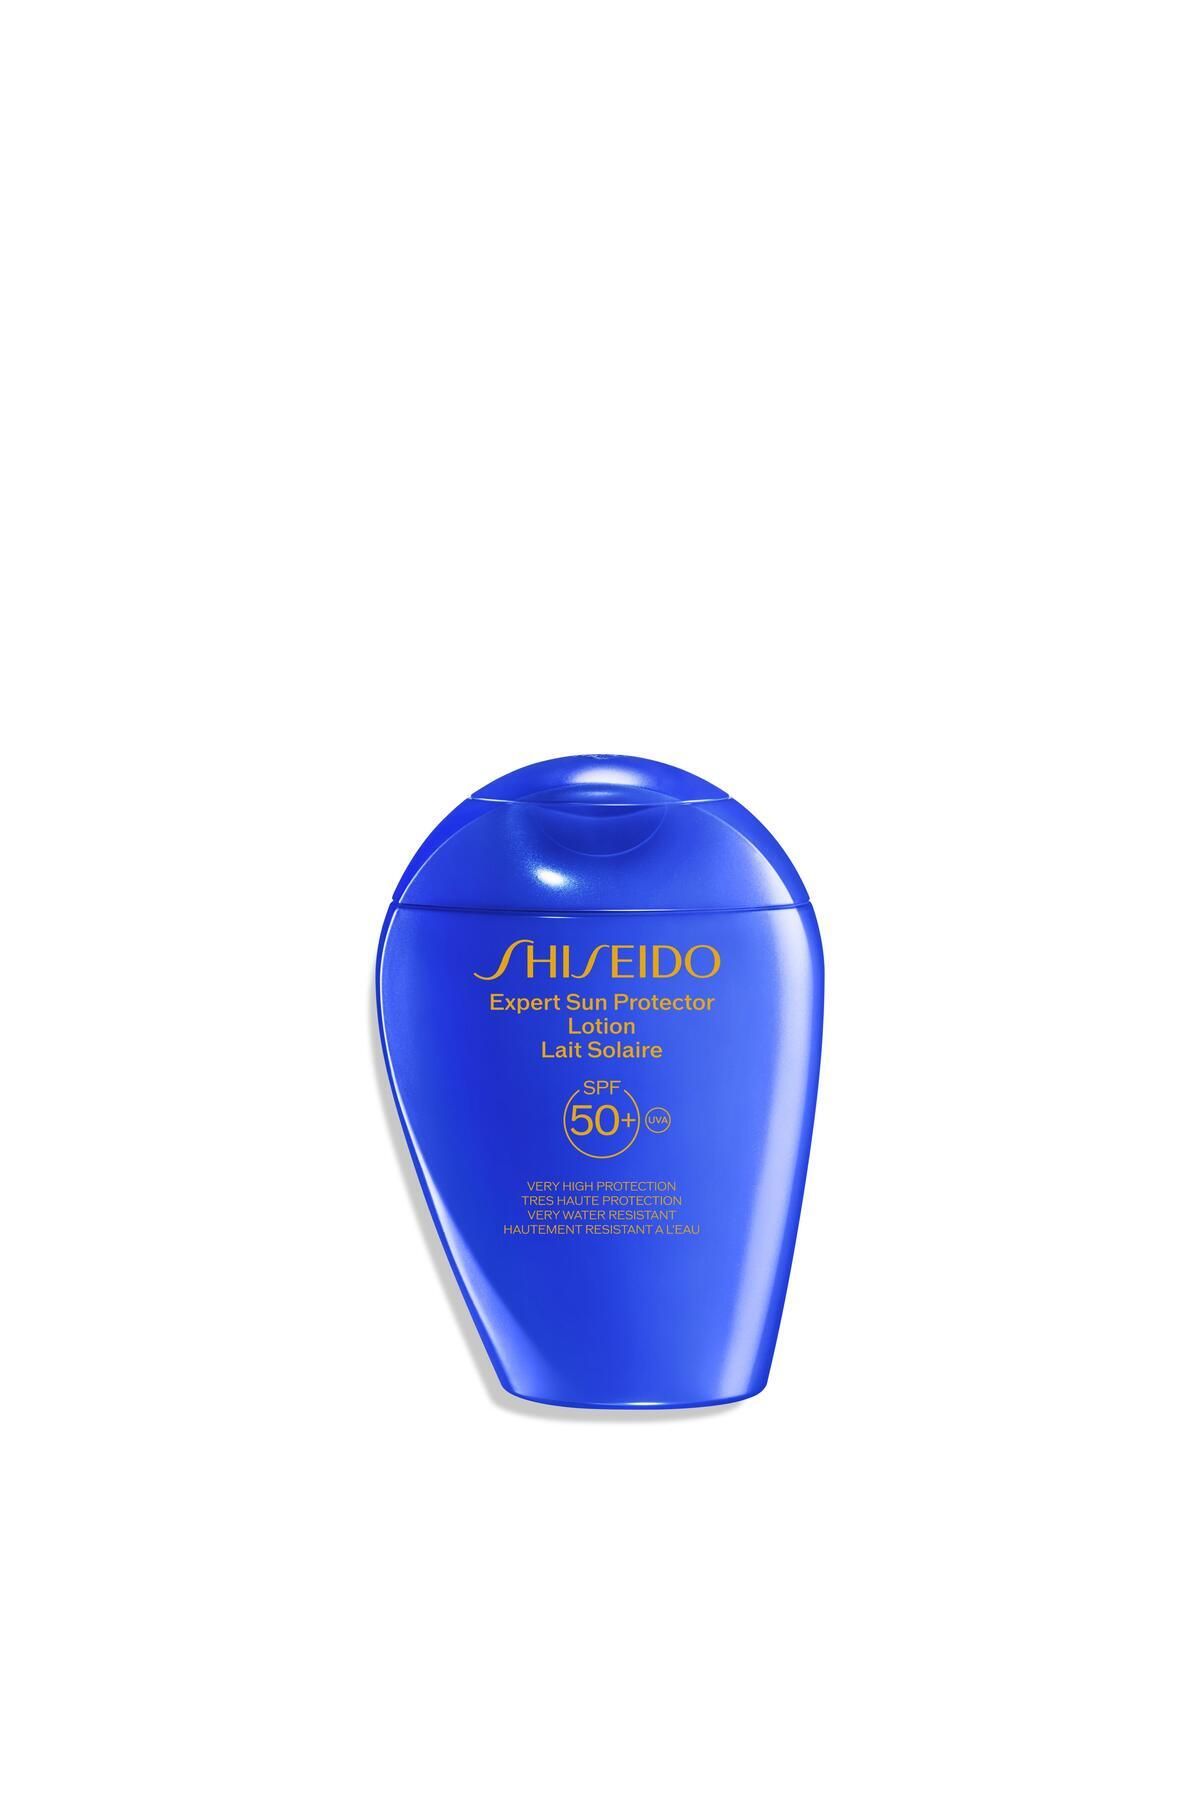 Shiseido محافظ آفتابی متخصص آبی GSC با SPF50 حجم 150 میلی لیتر